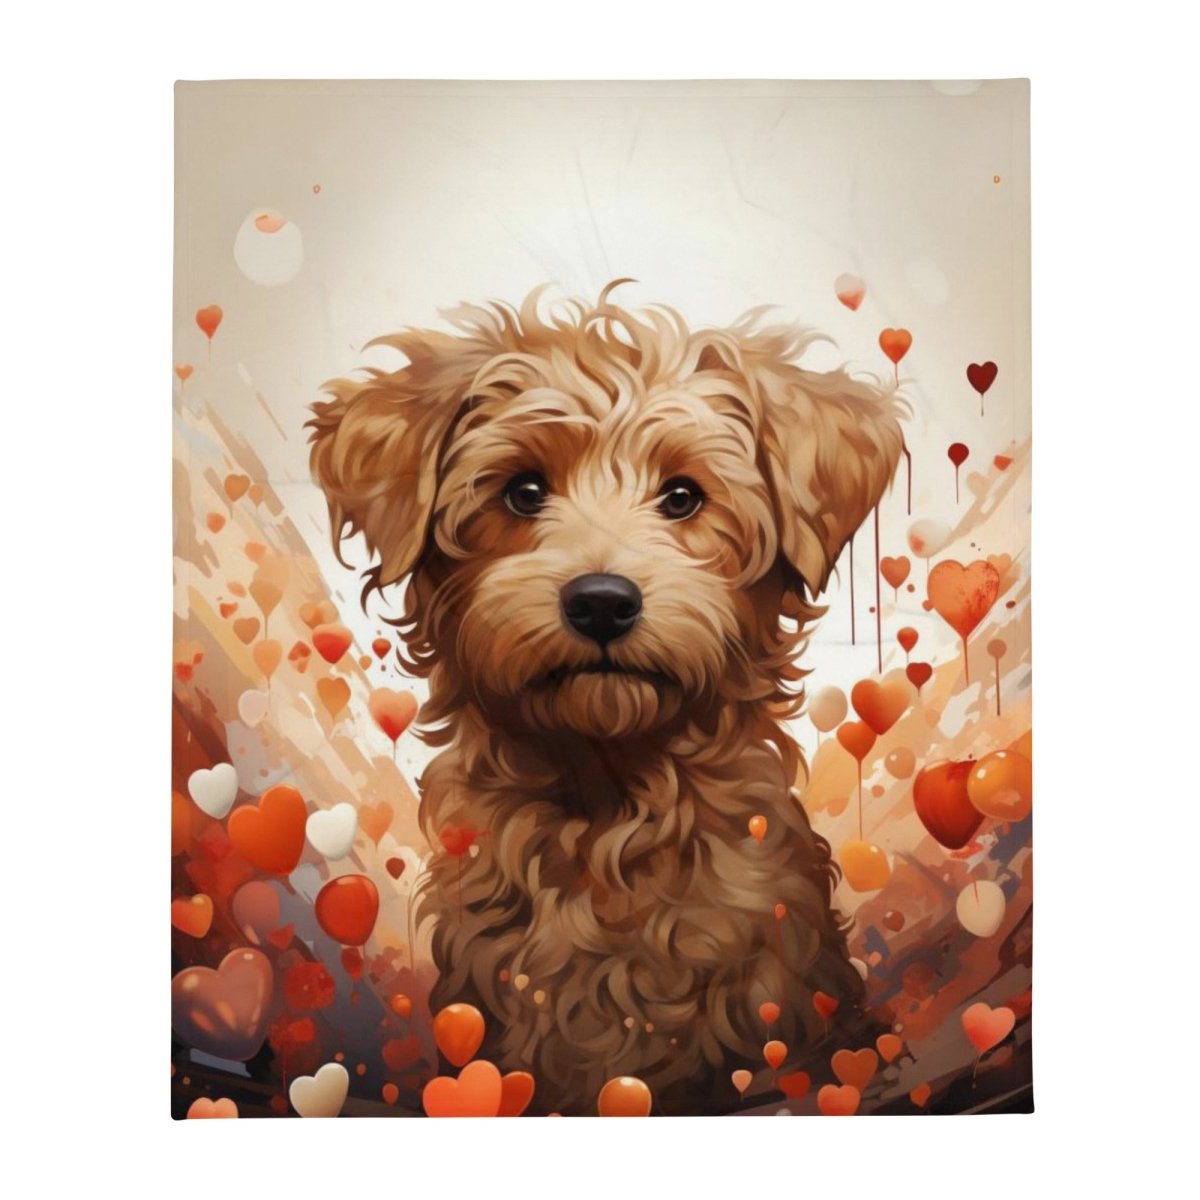 Goldendoodle Puppy Love Throw Blanket - Funny Nikko